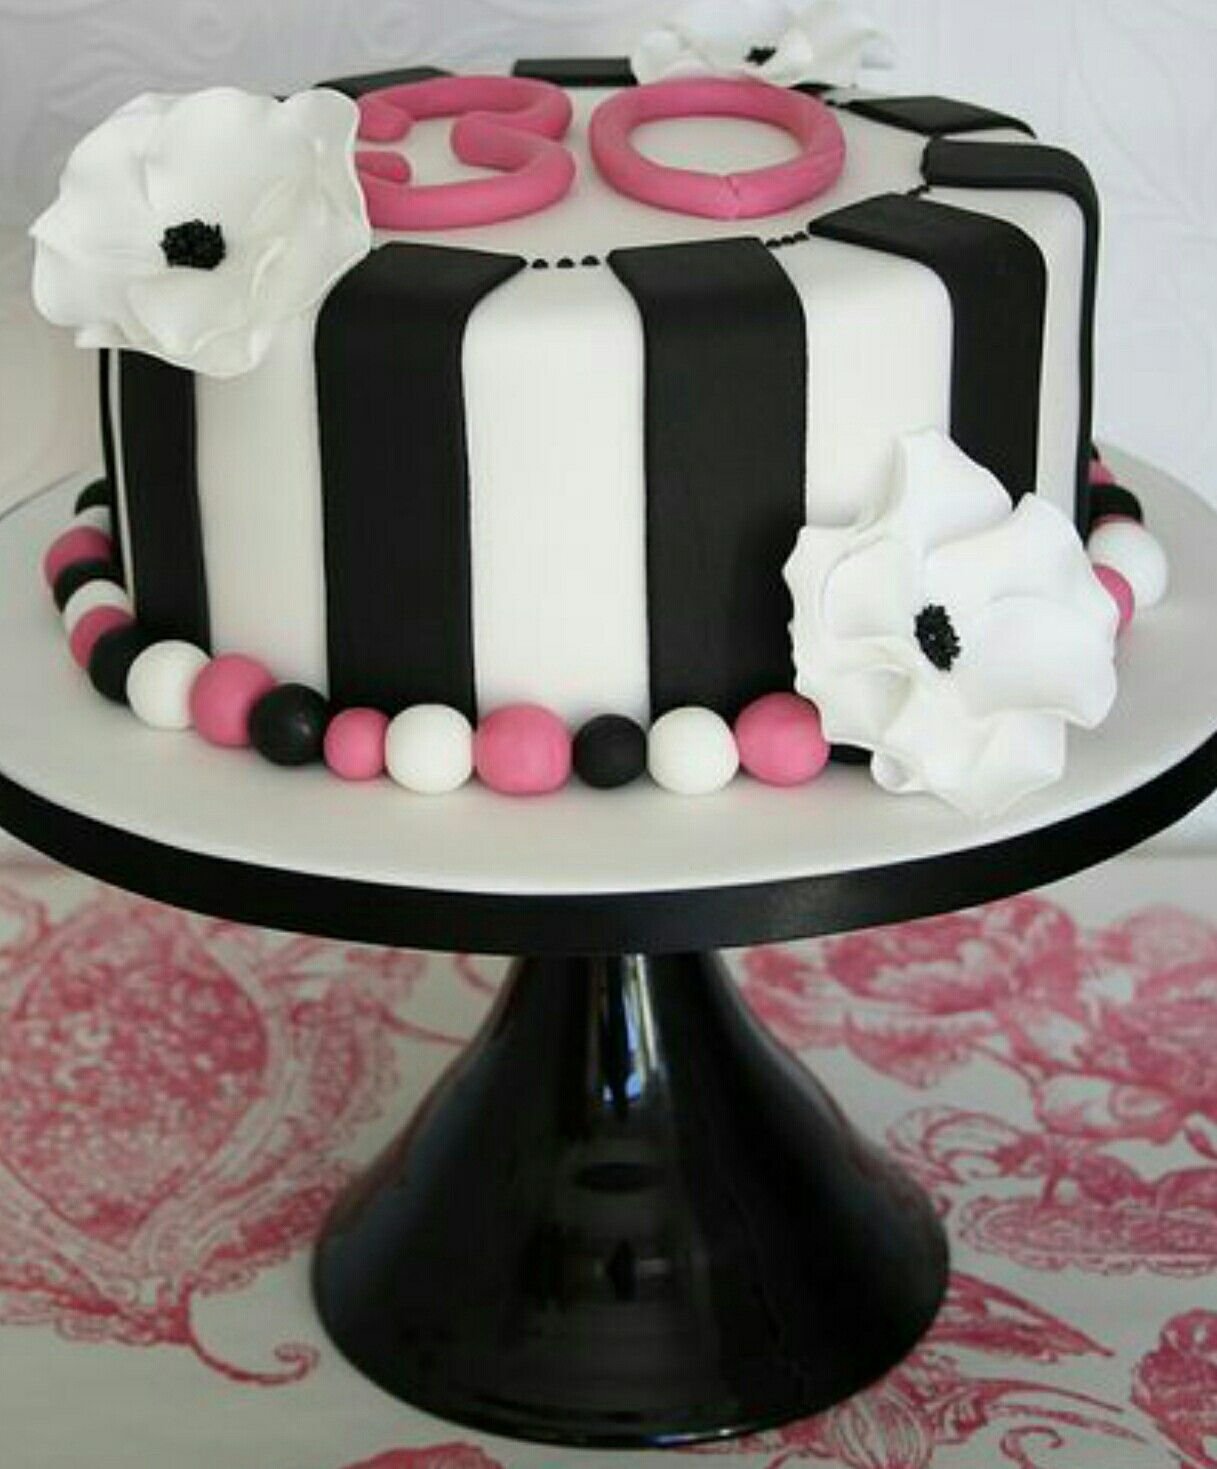 Черно розовый торт. Торт черно розовый. Торт черный с розовым. Бело-розово-черный торт. Черно-бело-розовый торт.